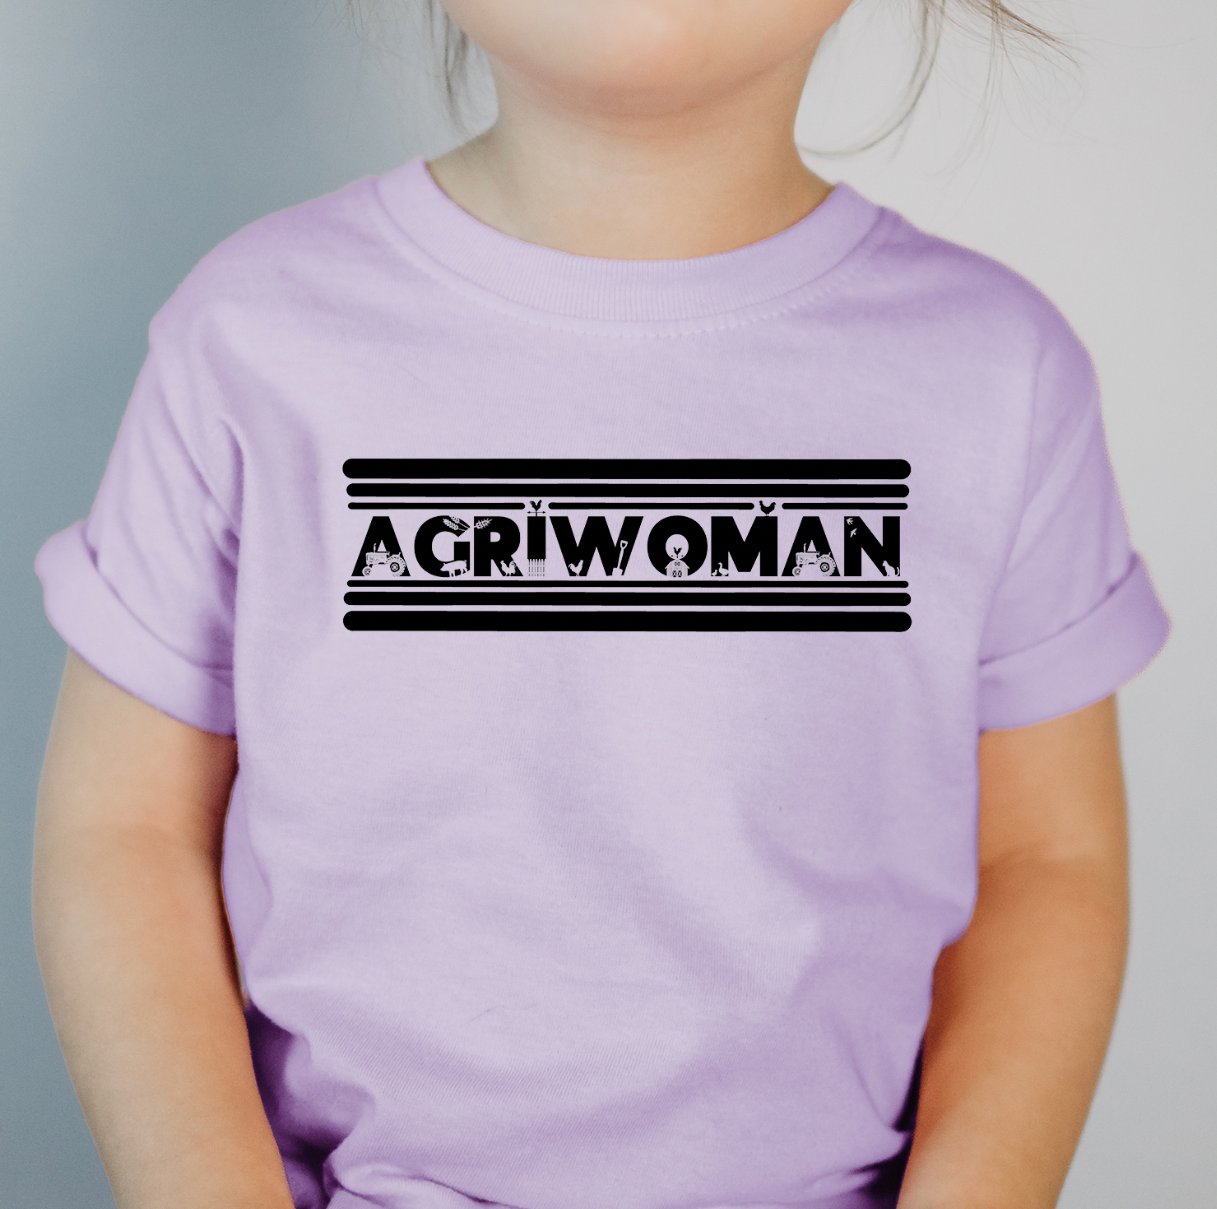 Agriwomen One Piece/T-Shirt (Newborn - Youth XL) - Multiple Colors!